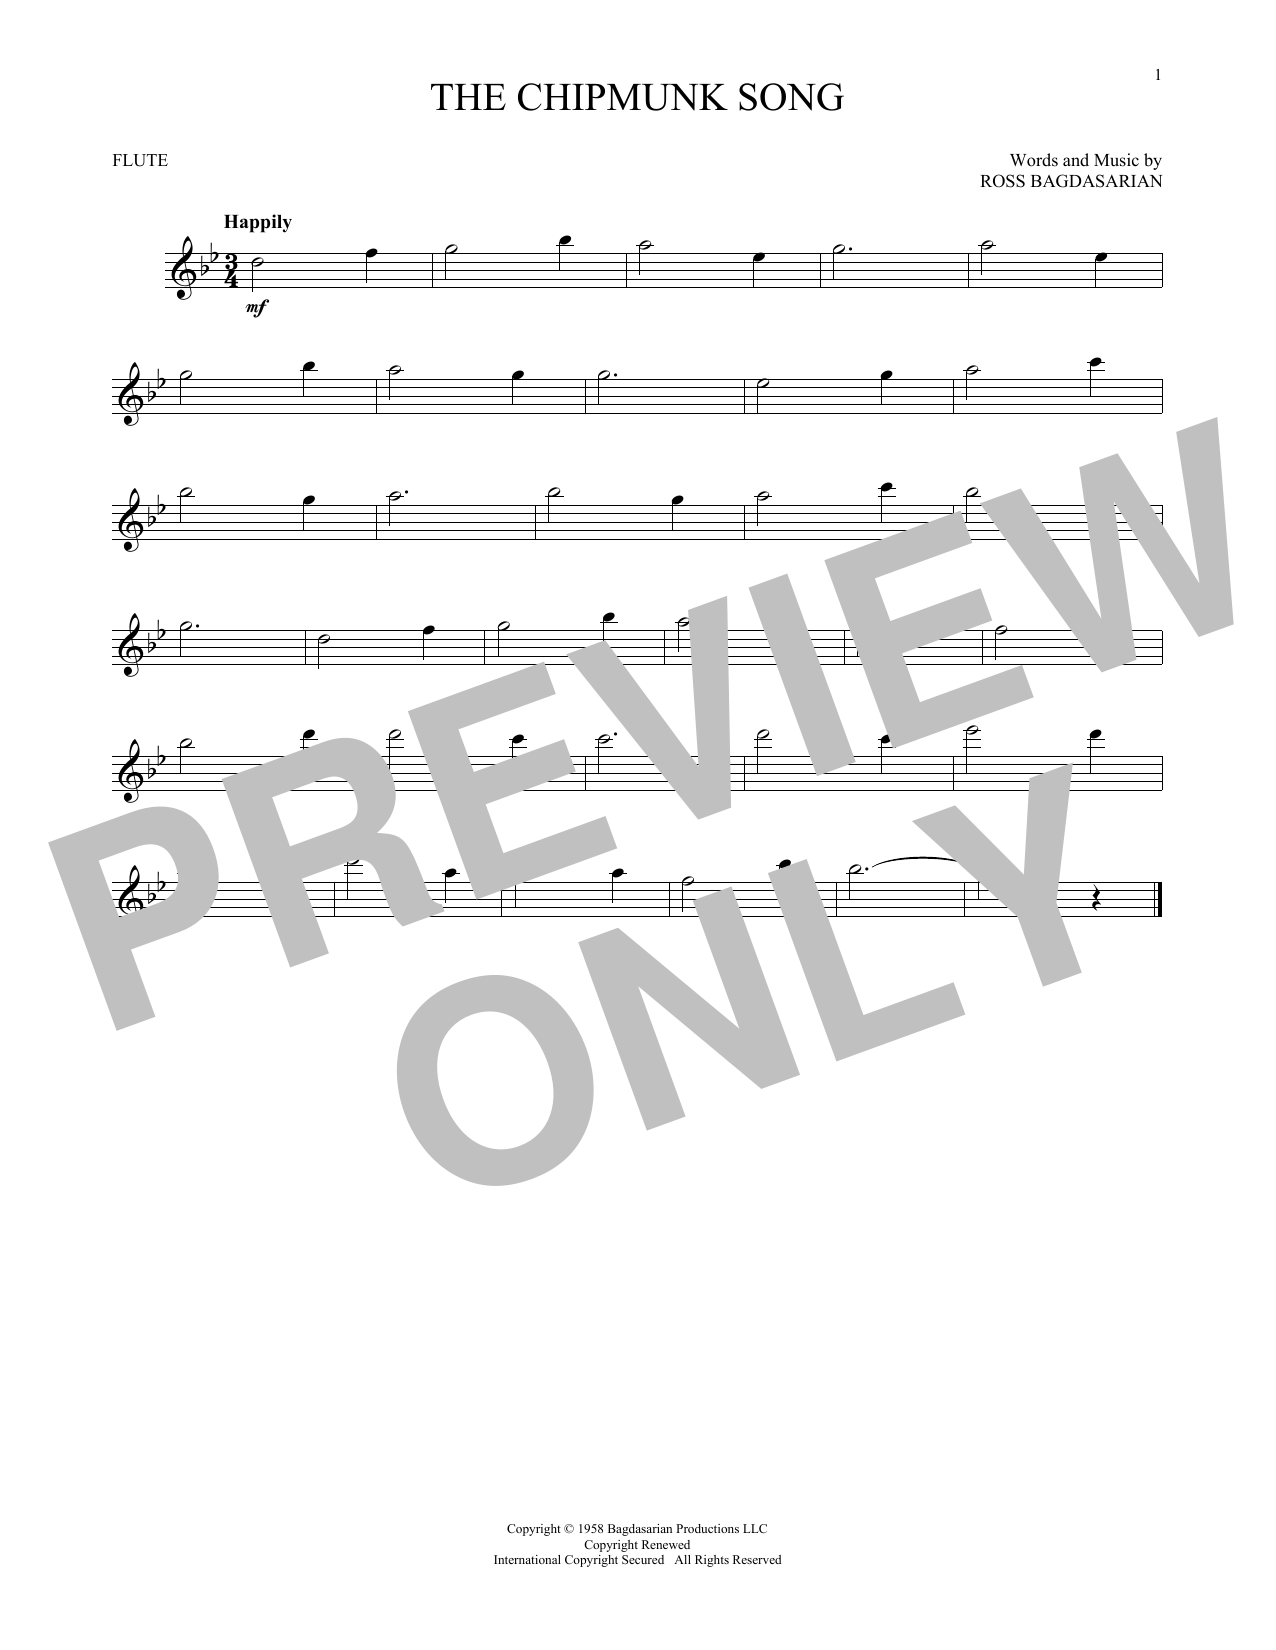 Ross Bagdasarian The Chipmunk Song Sheet Music Notes & Chords for Viola - Download or Print PDF